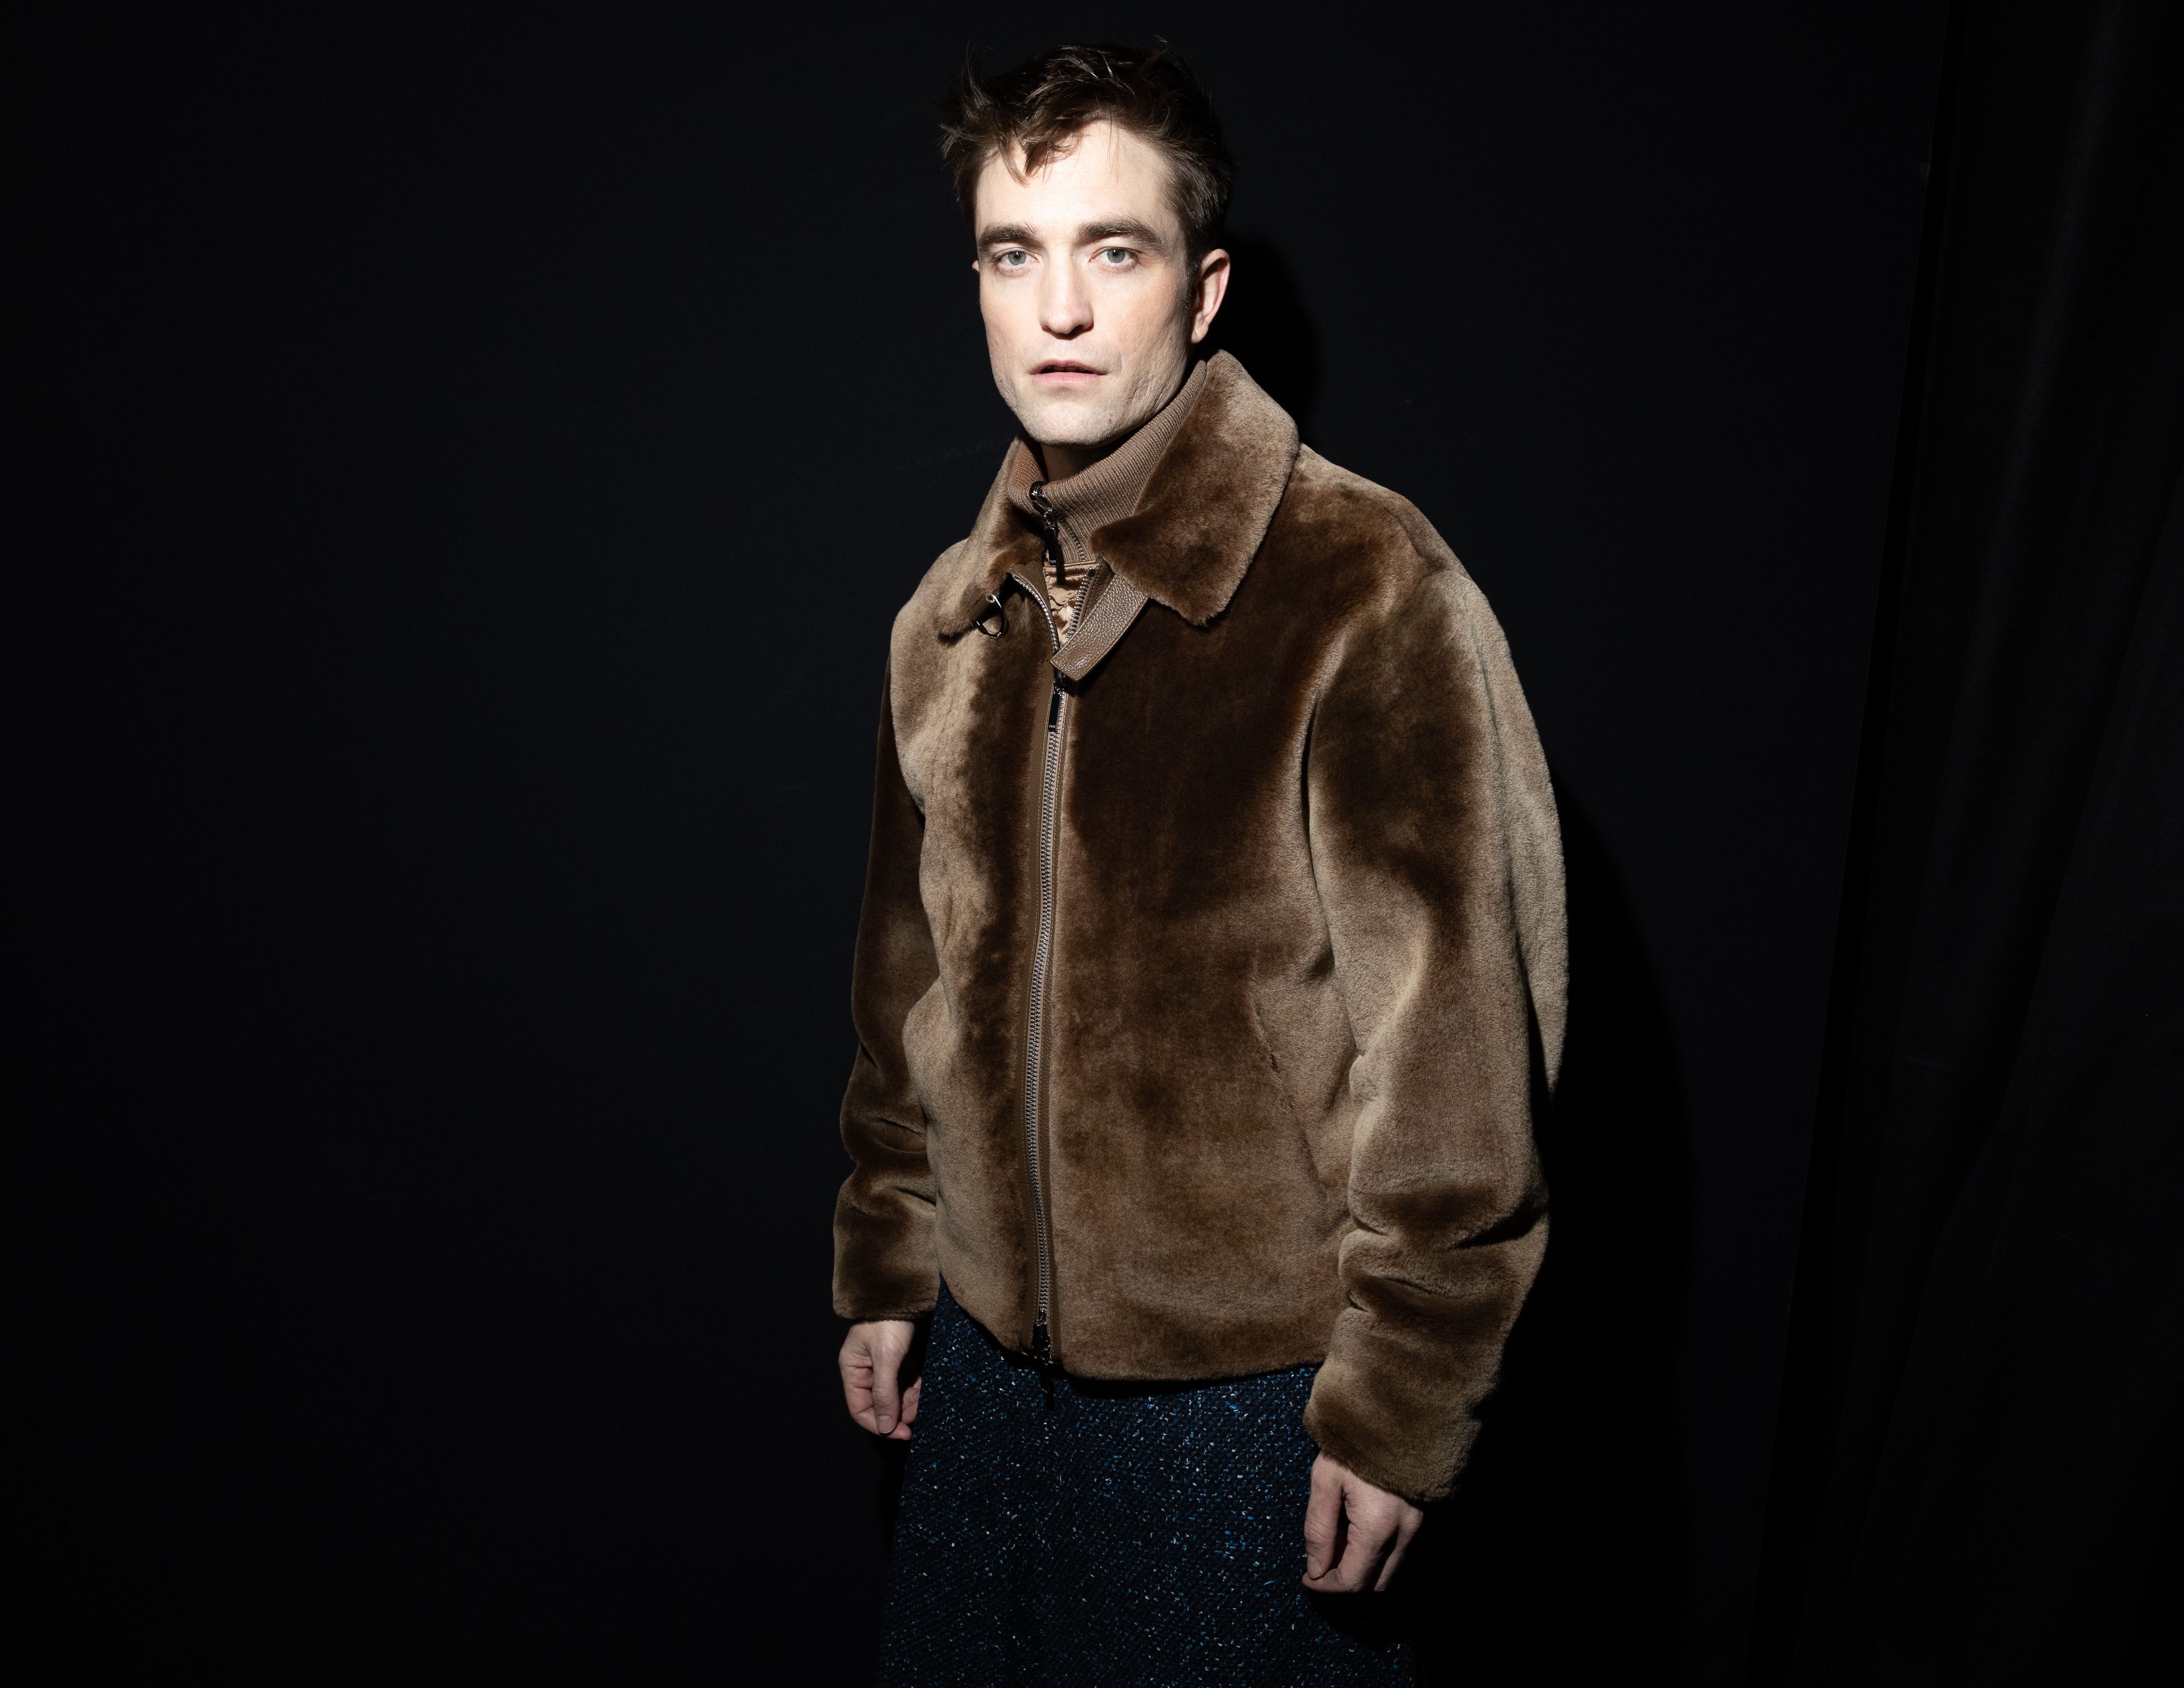 Robert Pattinson Wears a Tweed Skirt to Dior's Star-Studded Paris